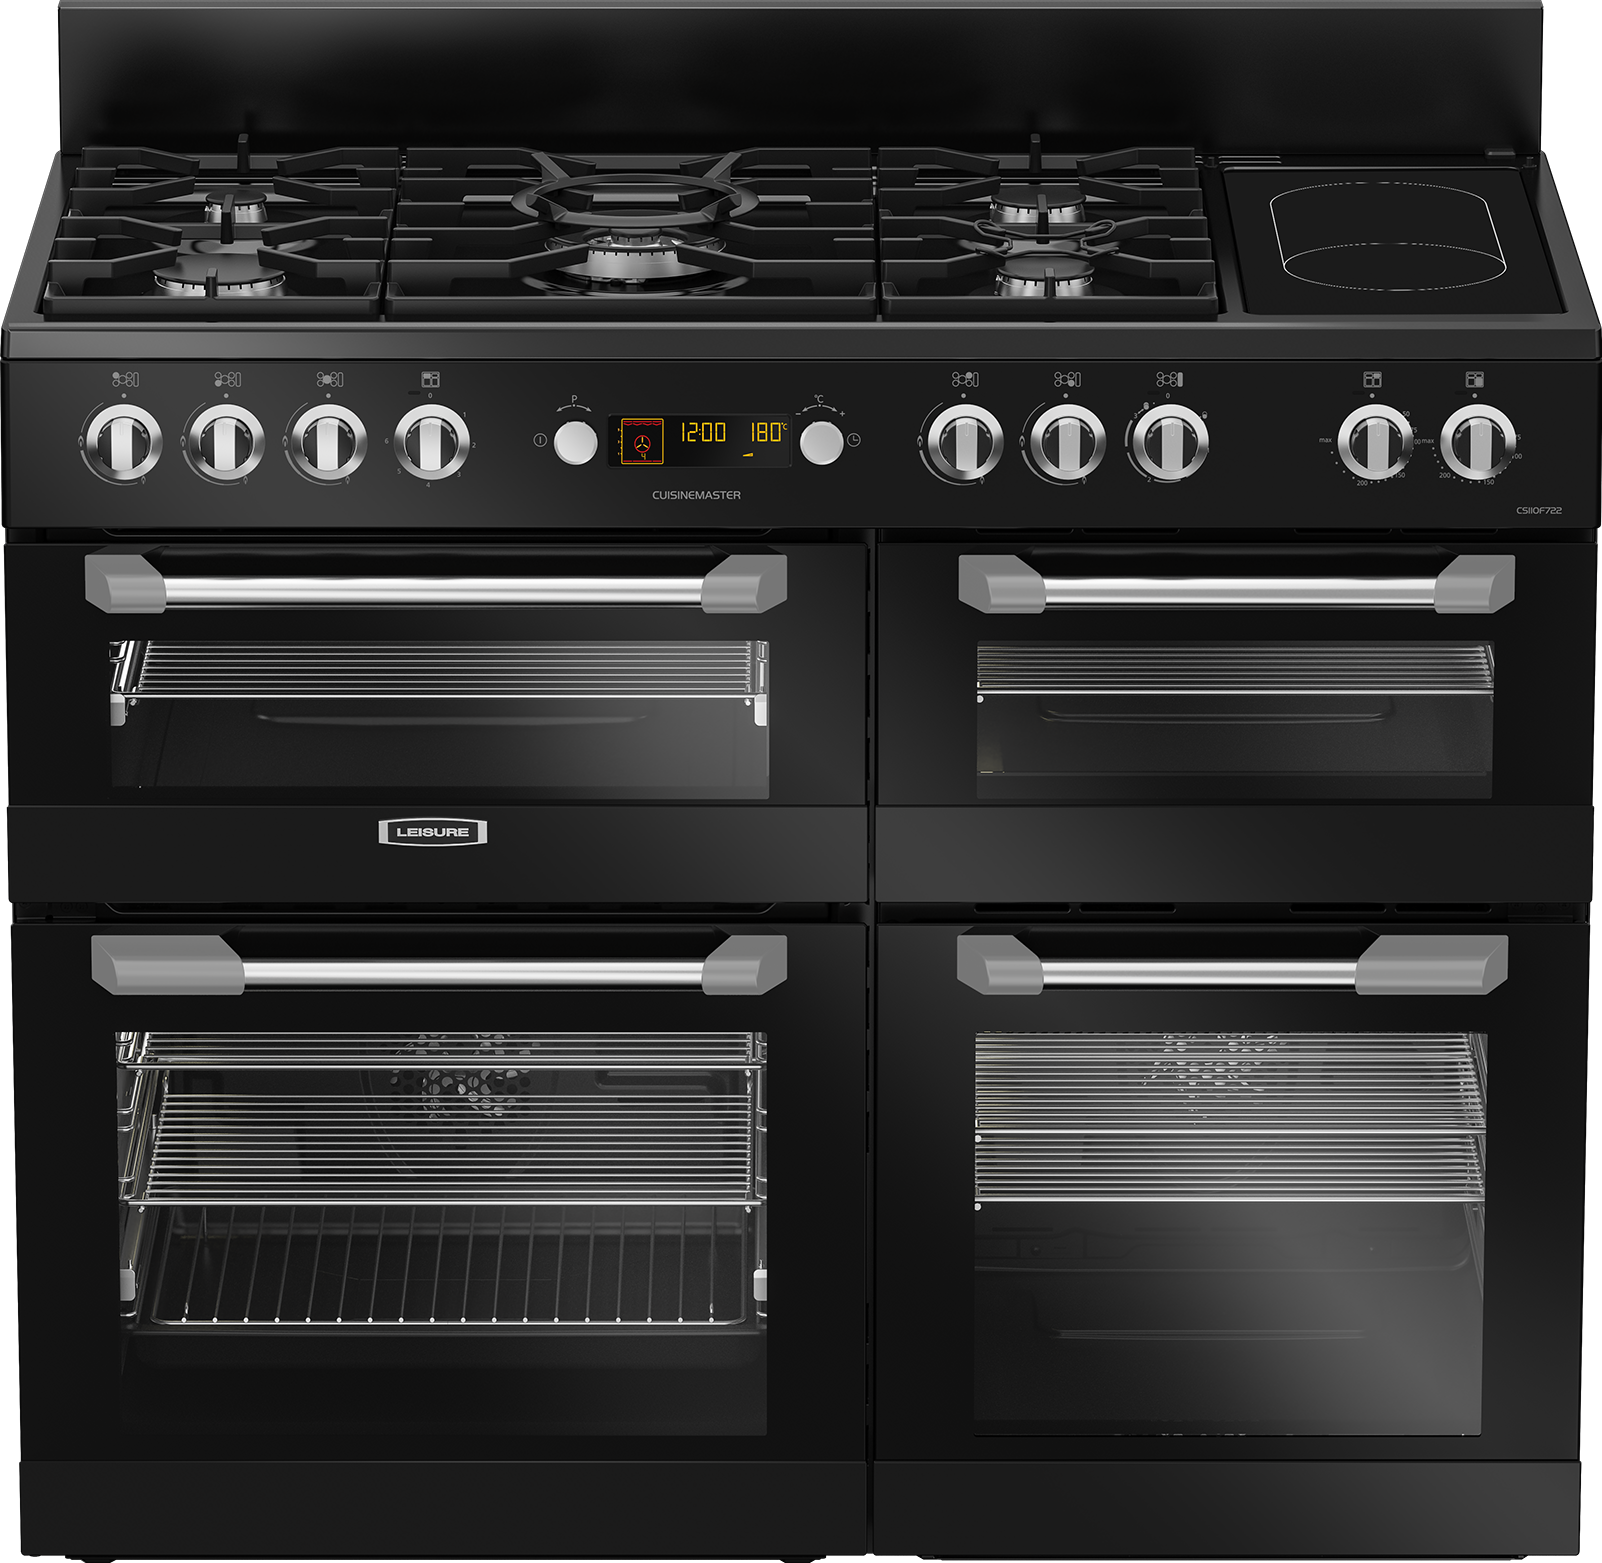 Leisure Cuisinemaster CS110F722K 110cm Dual Fuel Range Cooker - Black - A/A/A Rated, Black